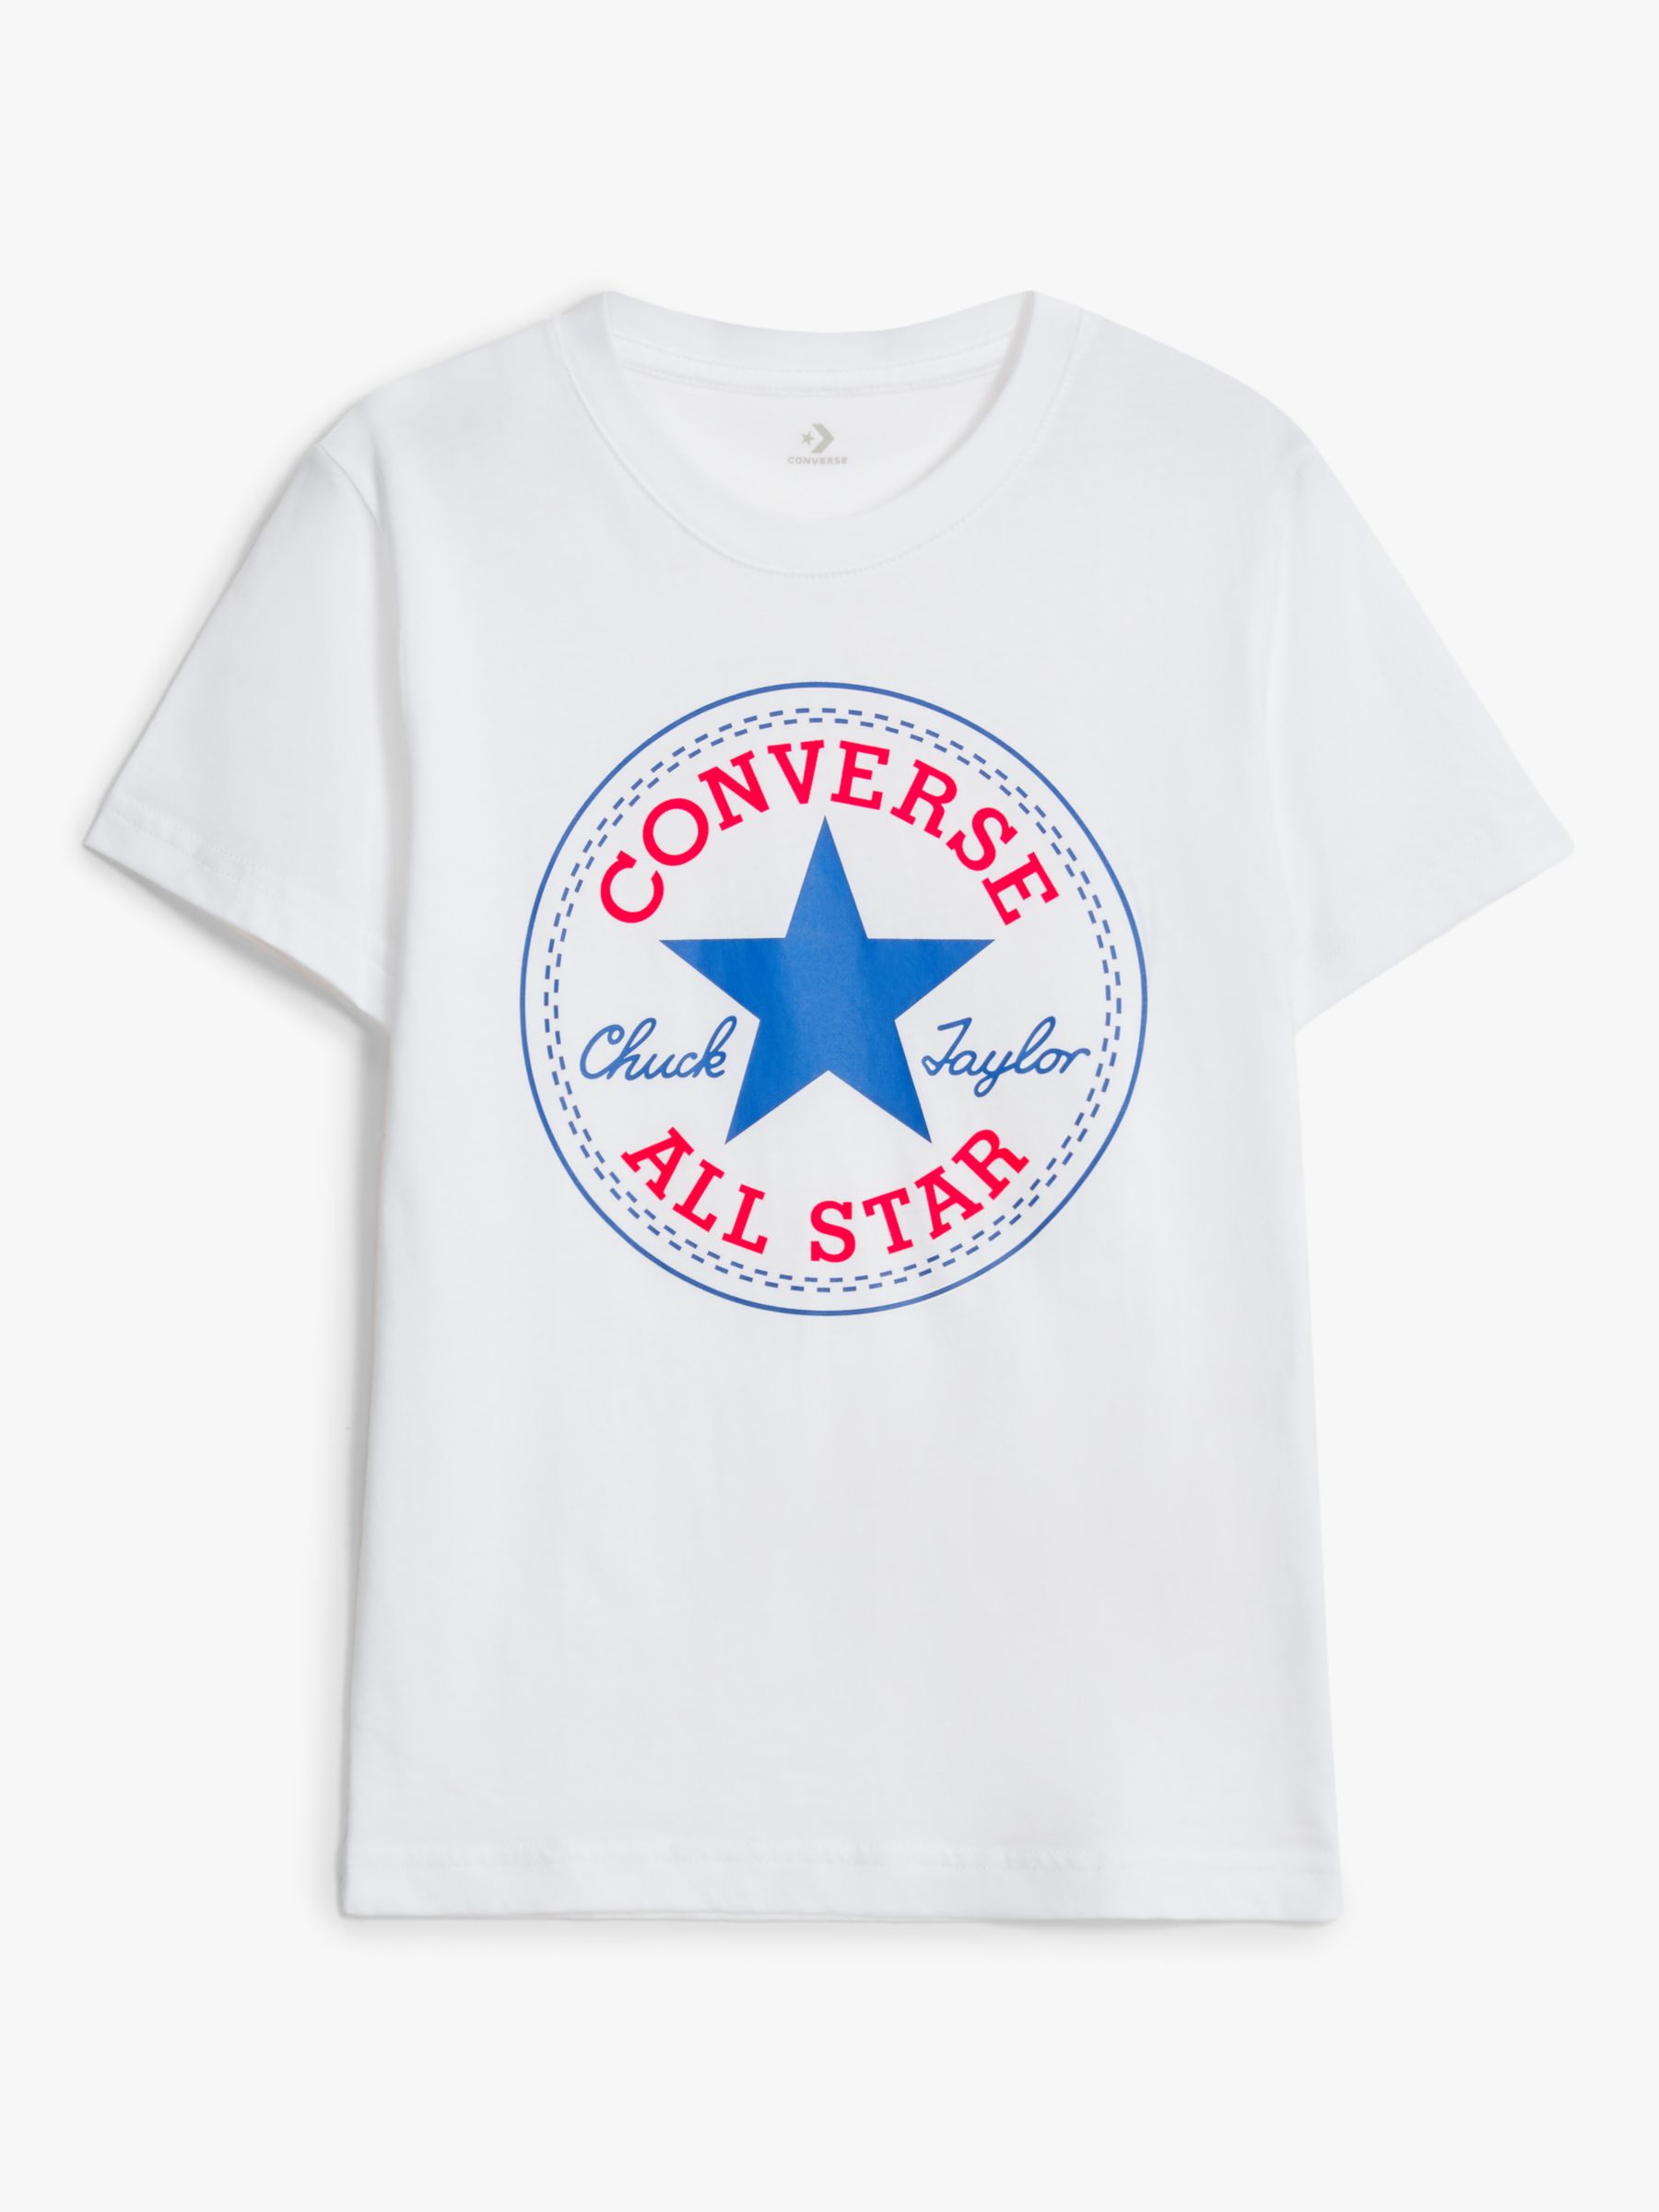 Converse Kids' Chuck Patch T-Shirt, White, 8-10 years